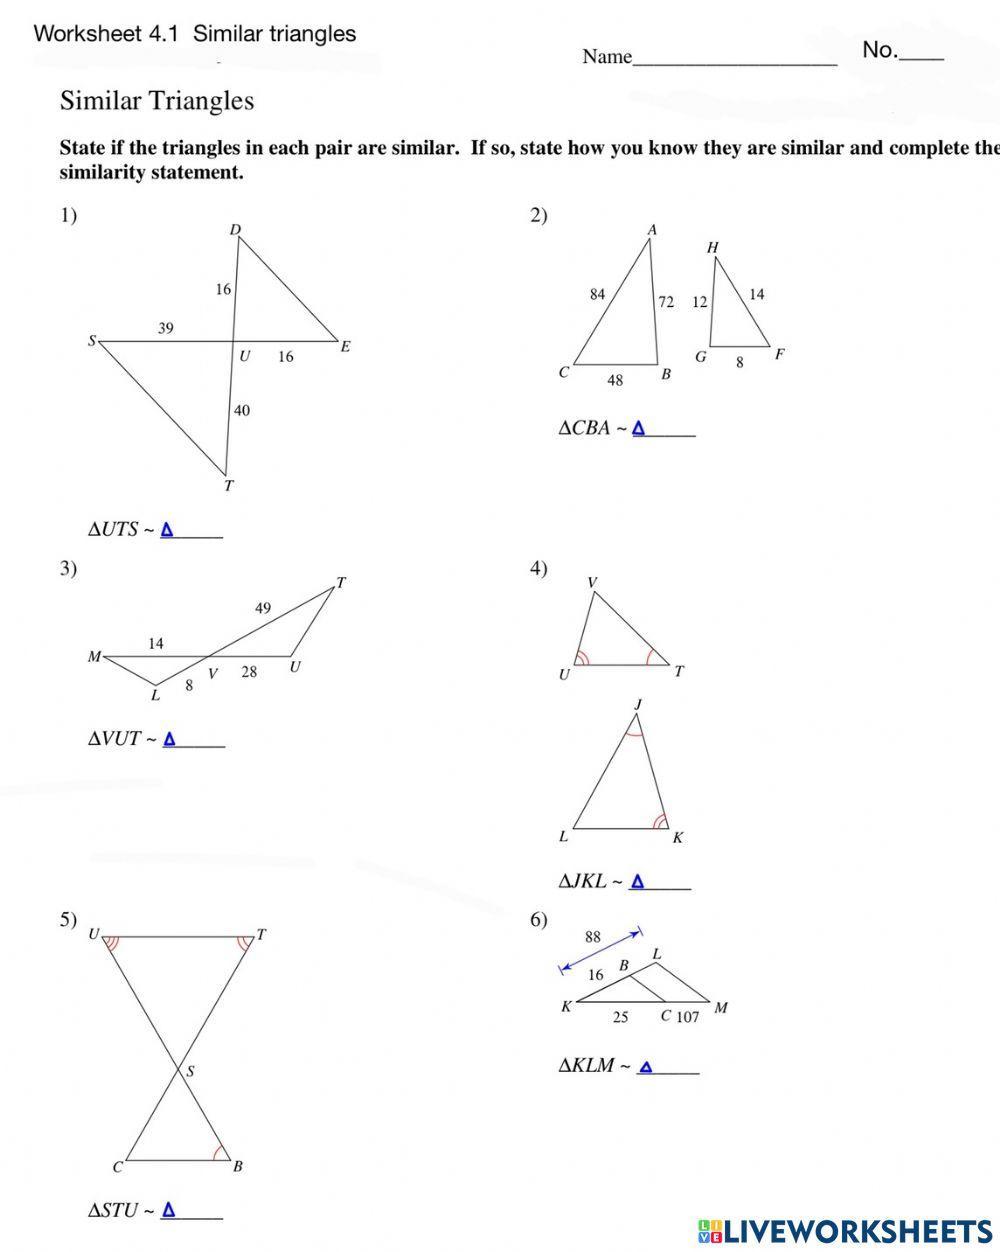 Worksheet 4.1 Similar Triangles